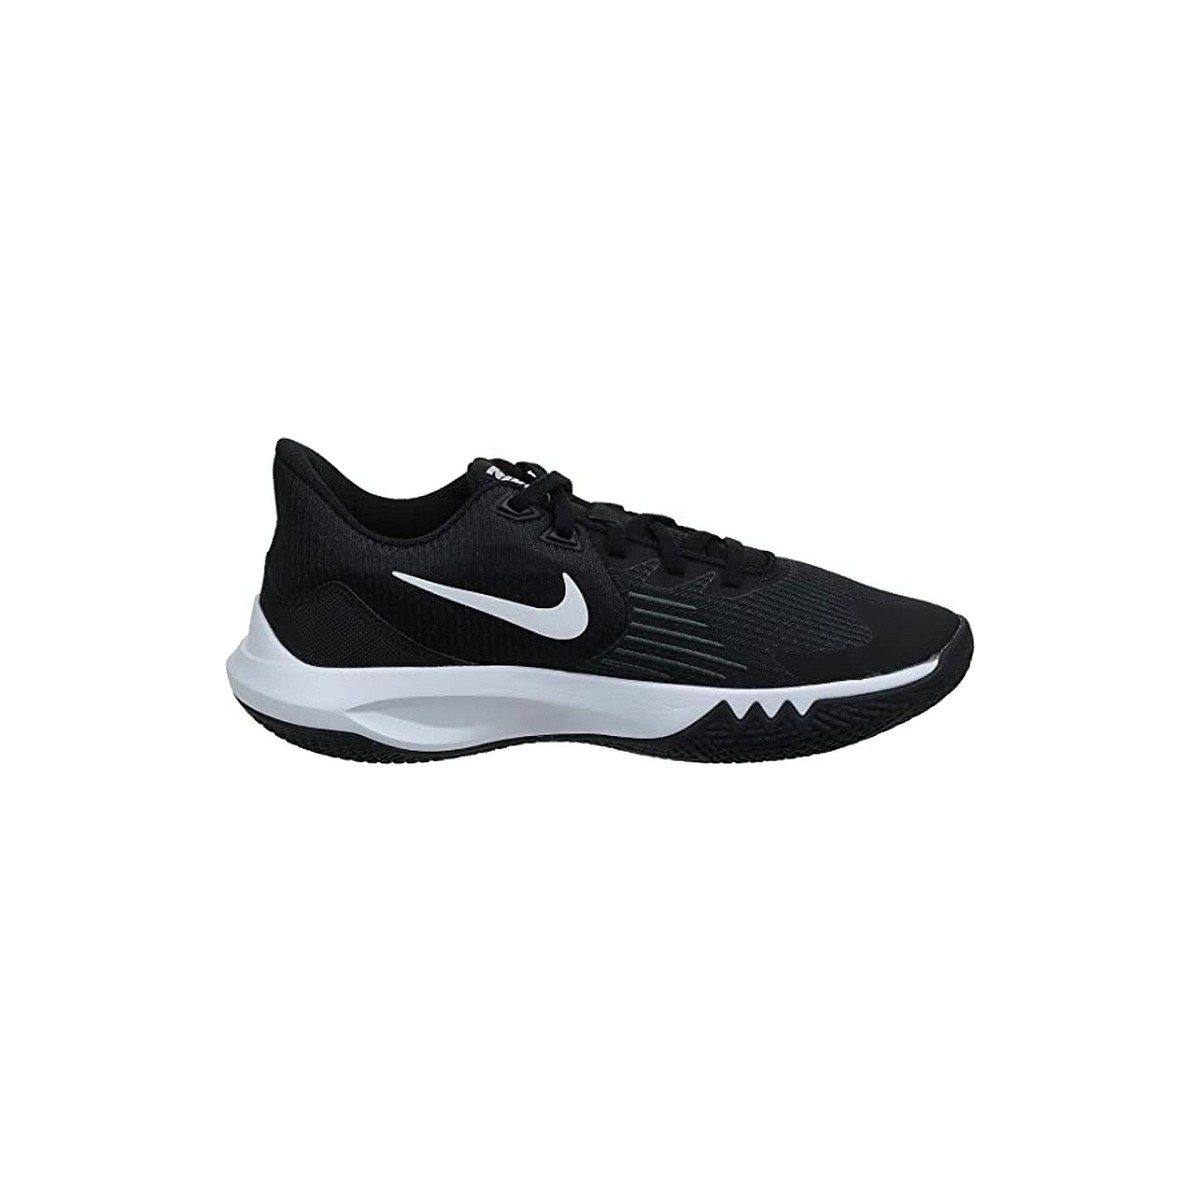 Topánky Muž Univerzálna športová obuv Nike PRECISION V Čierna